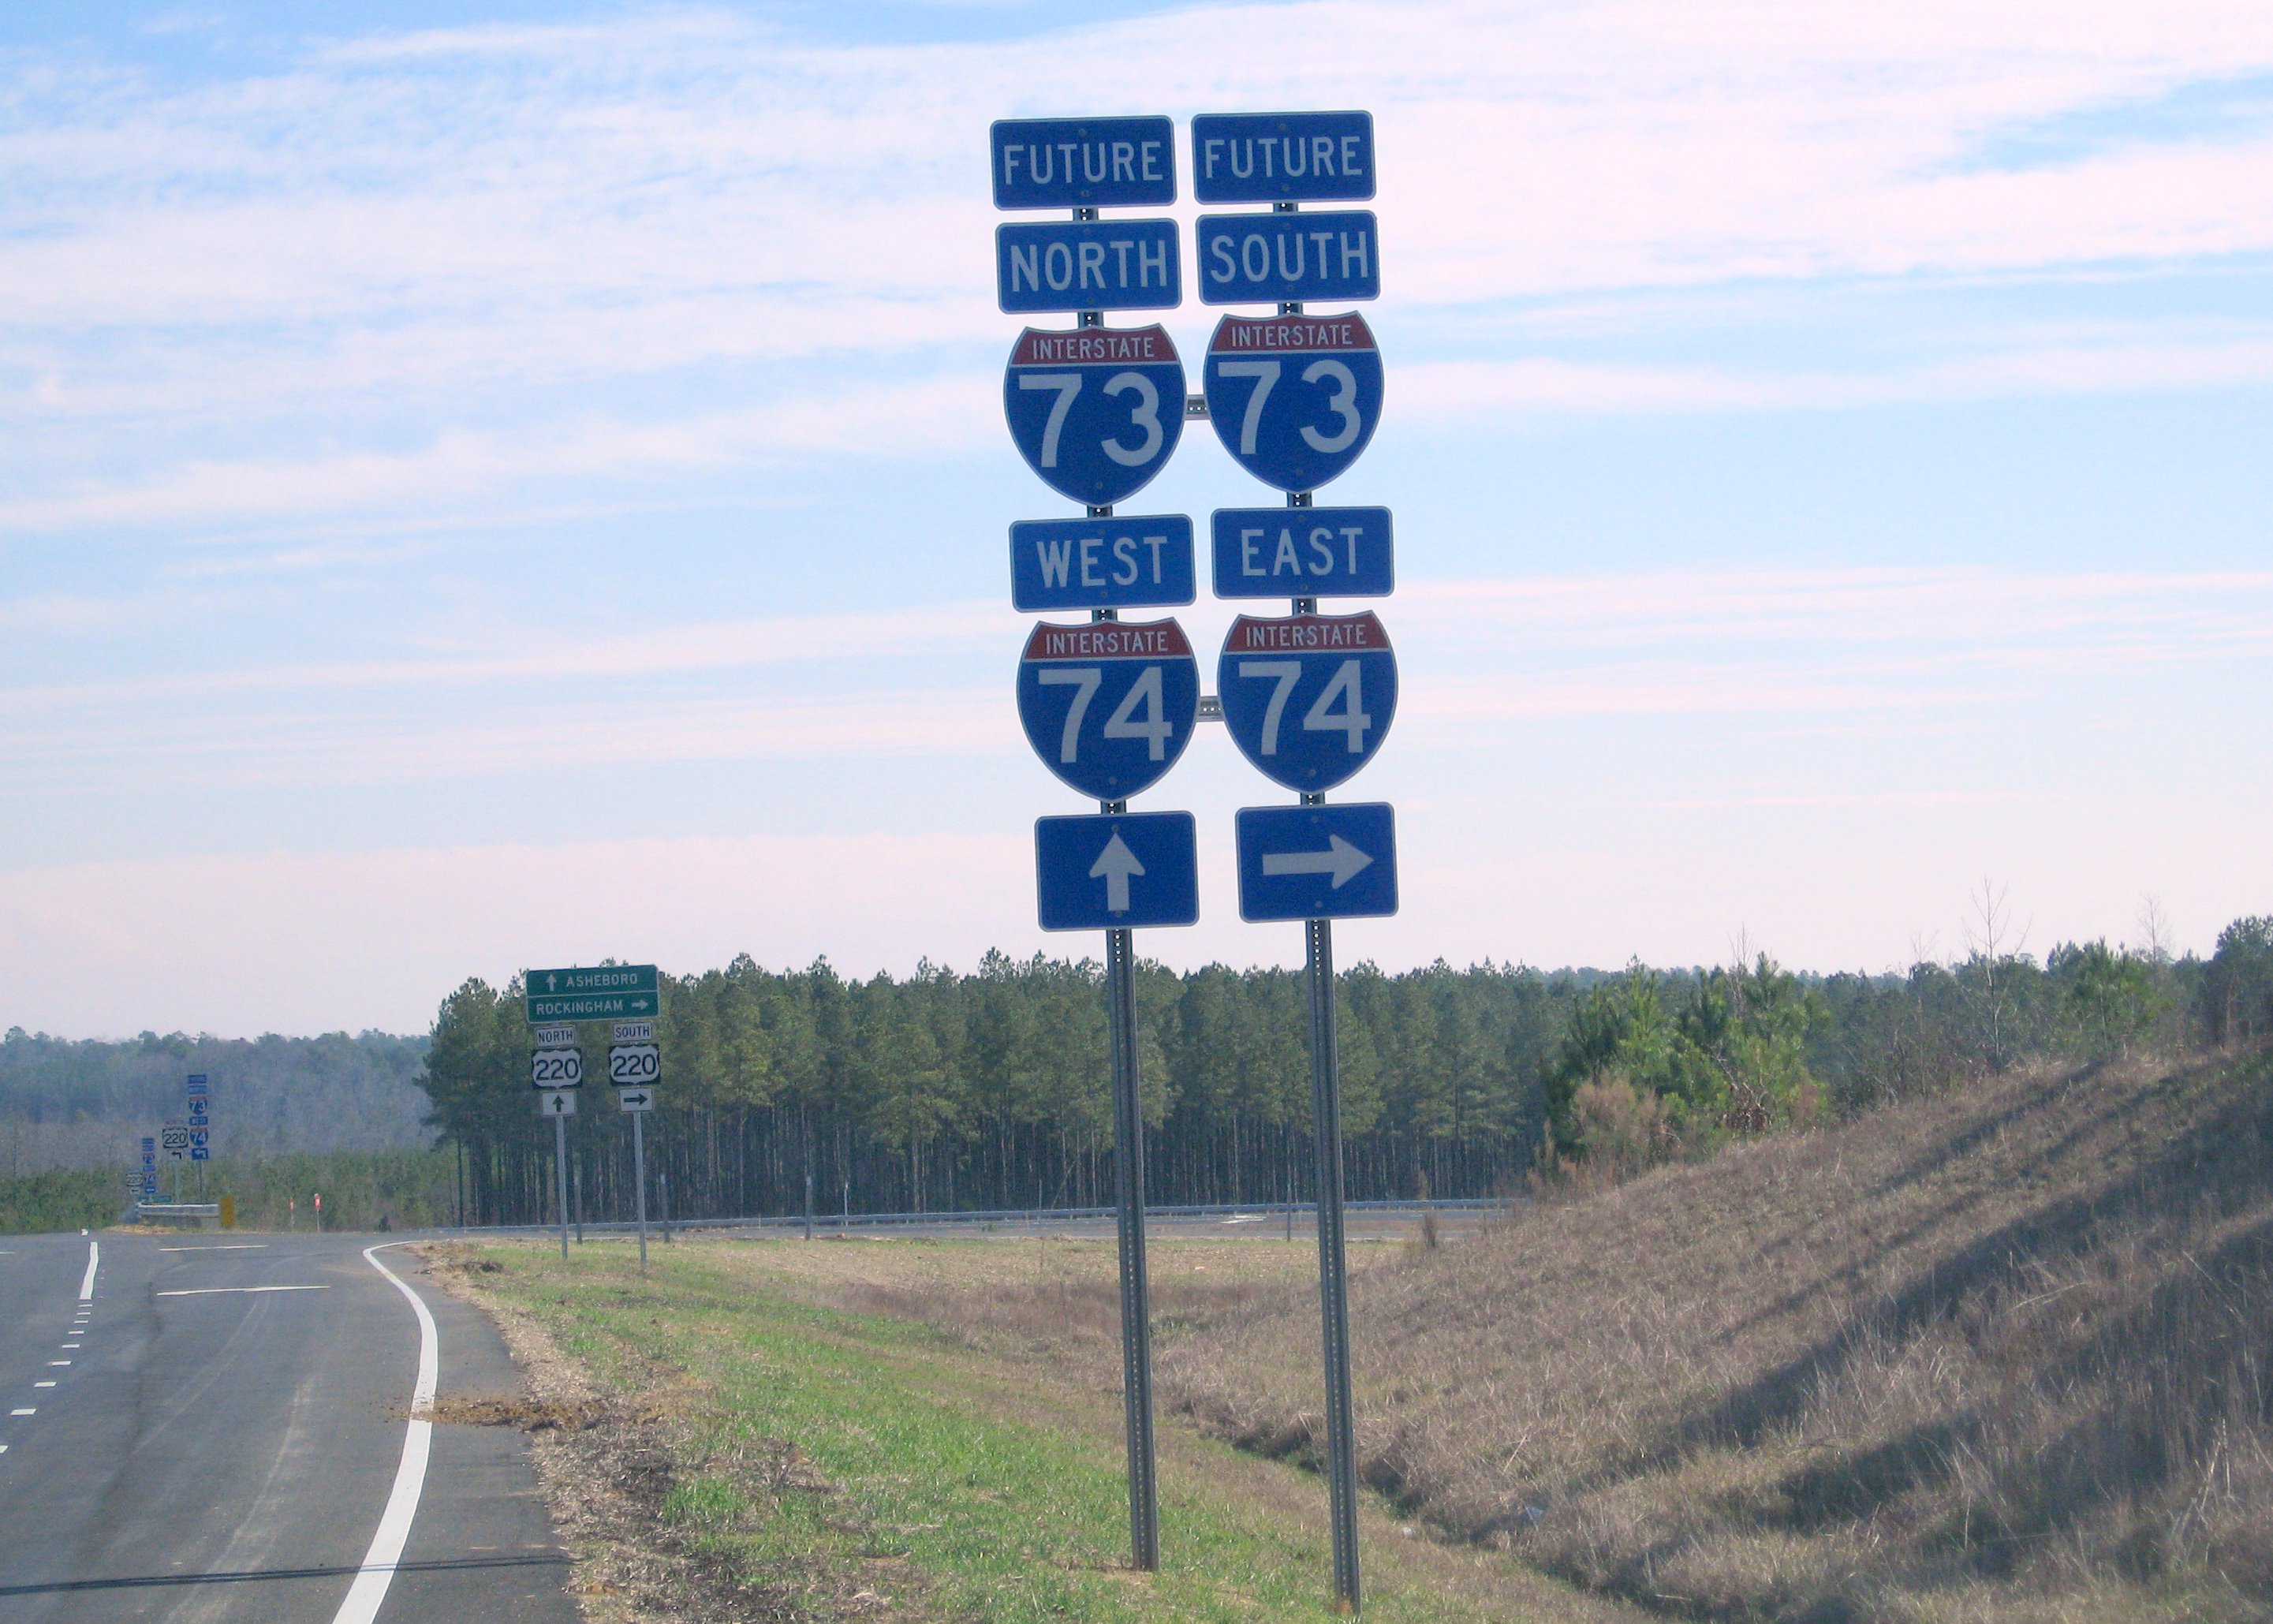 Future I-73/I-74 US 220 and US 220 Destination sign assemblies at Millstone 
Rd interchange near Ellerbe, Jan. 2008